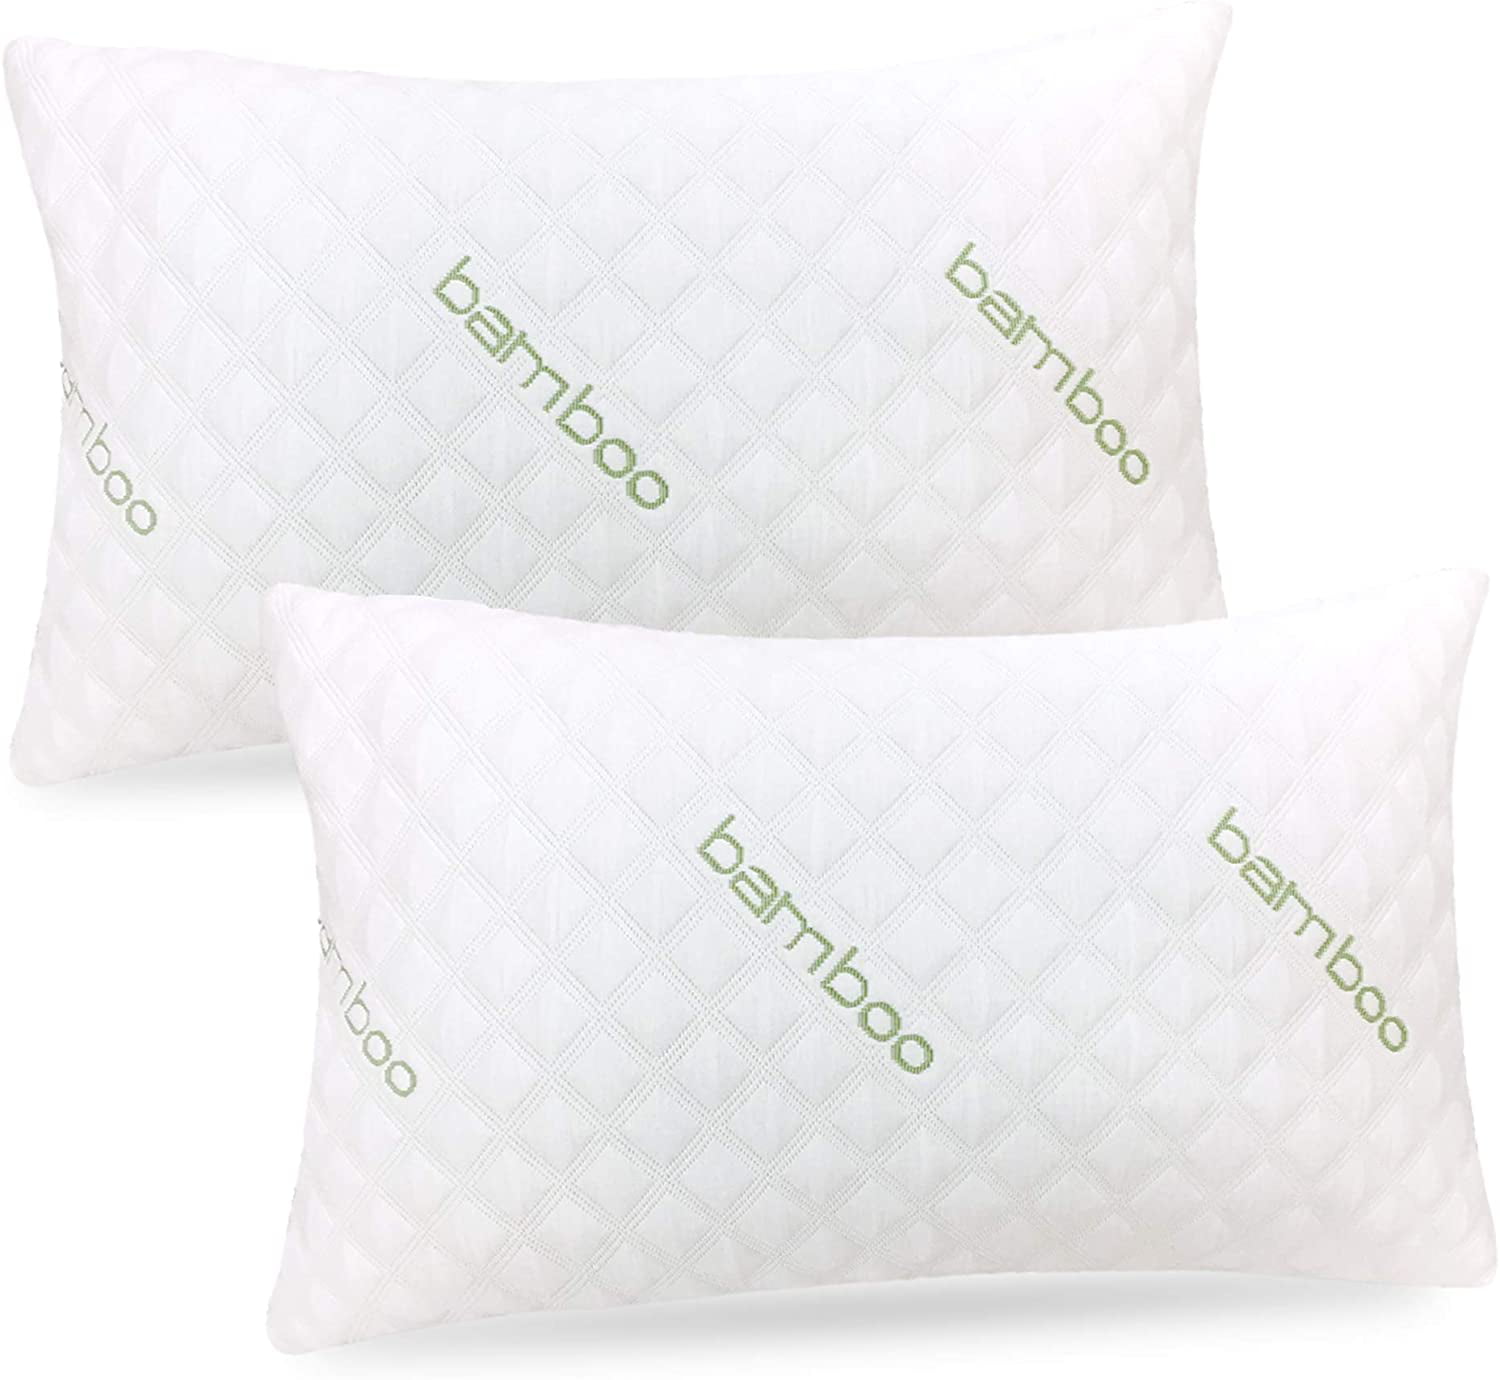 New Luxury Bamboo Memory Foam Pillow Anti-Bacterial Premium Support Pillow 